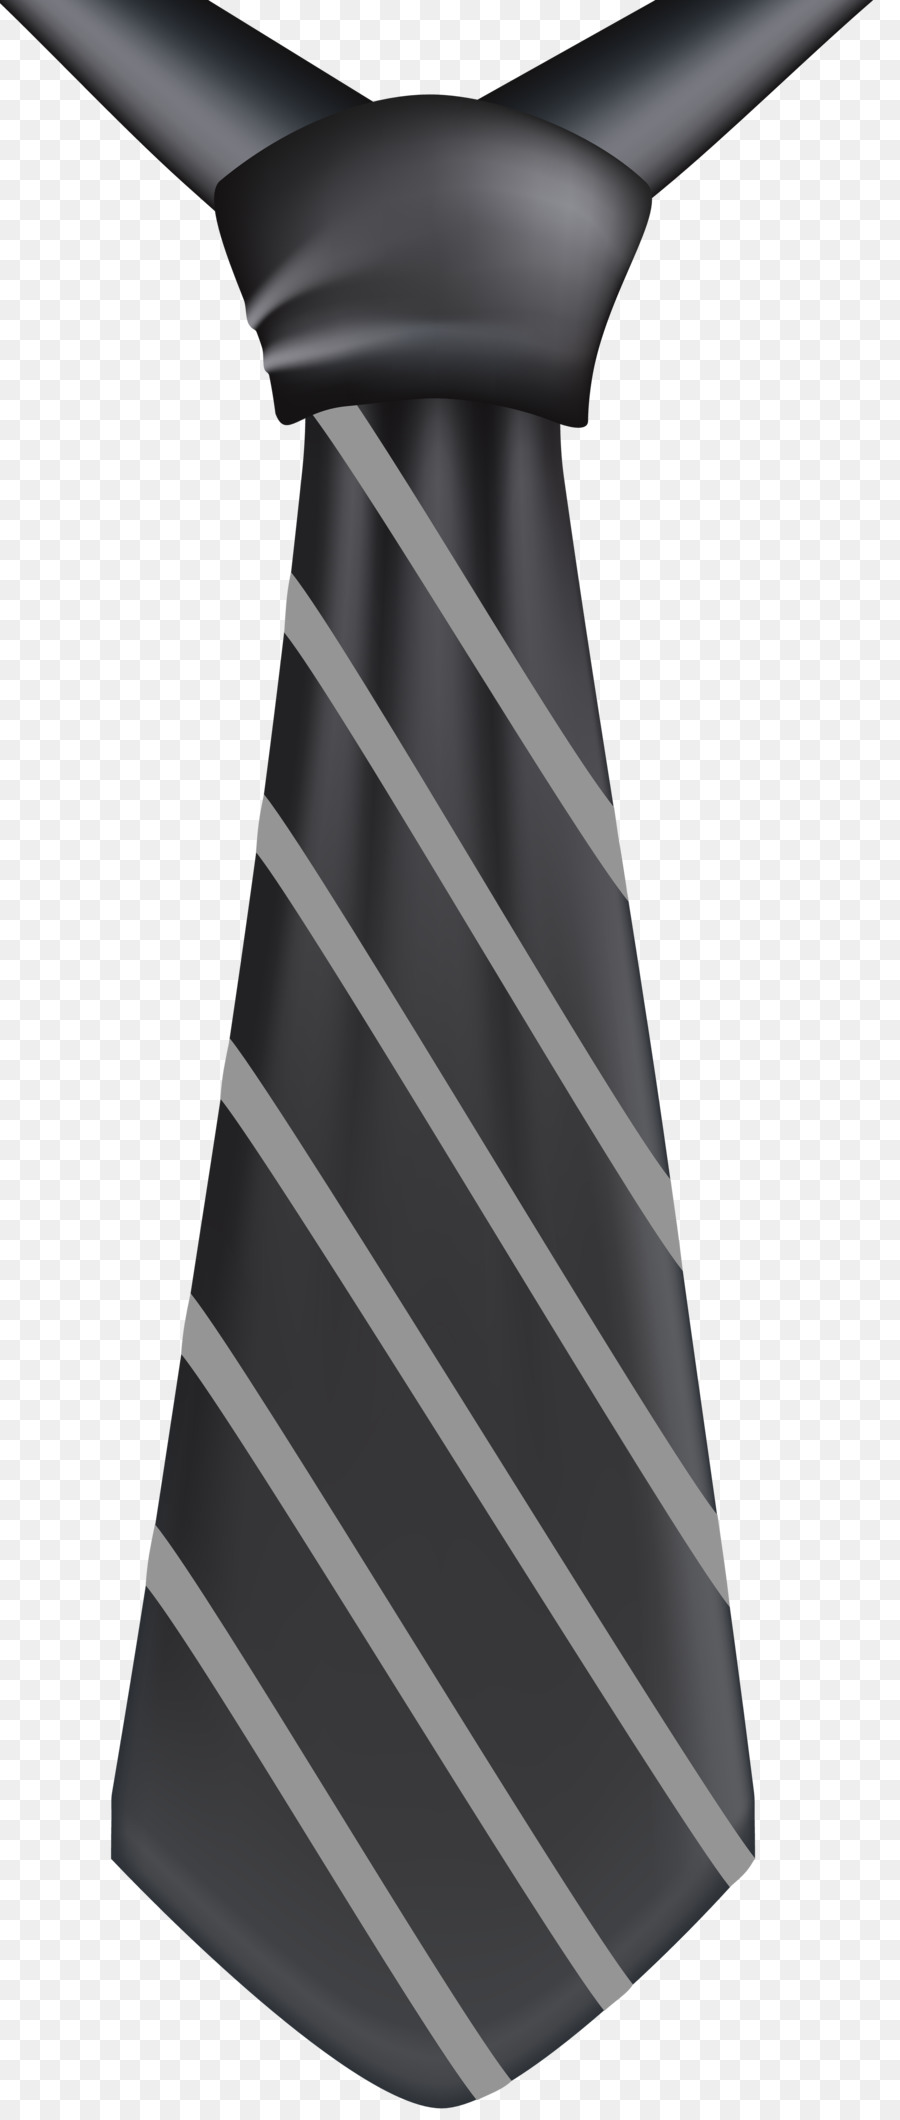 Necktie Bow tie Tie clip Clip art - others png download - 3404*8000 - Free Transparent Necktie png Download.